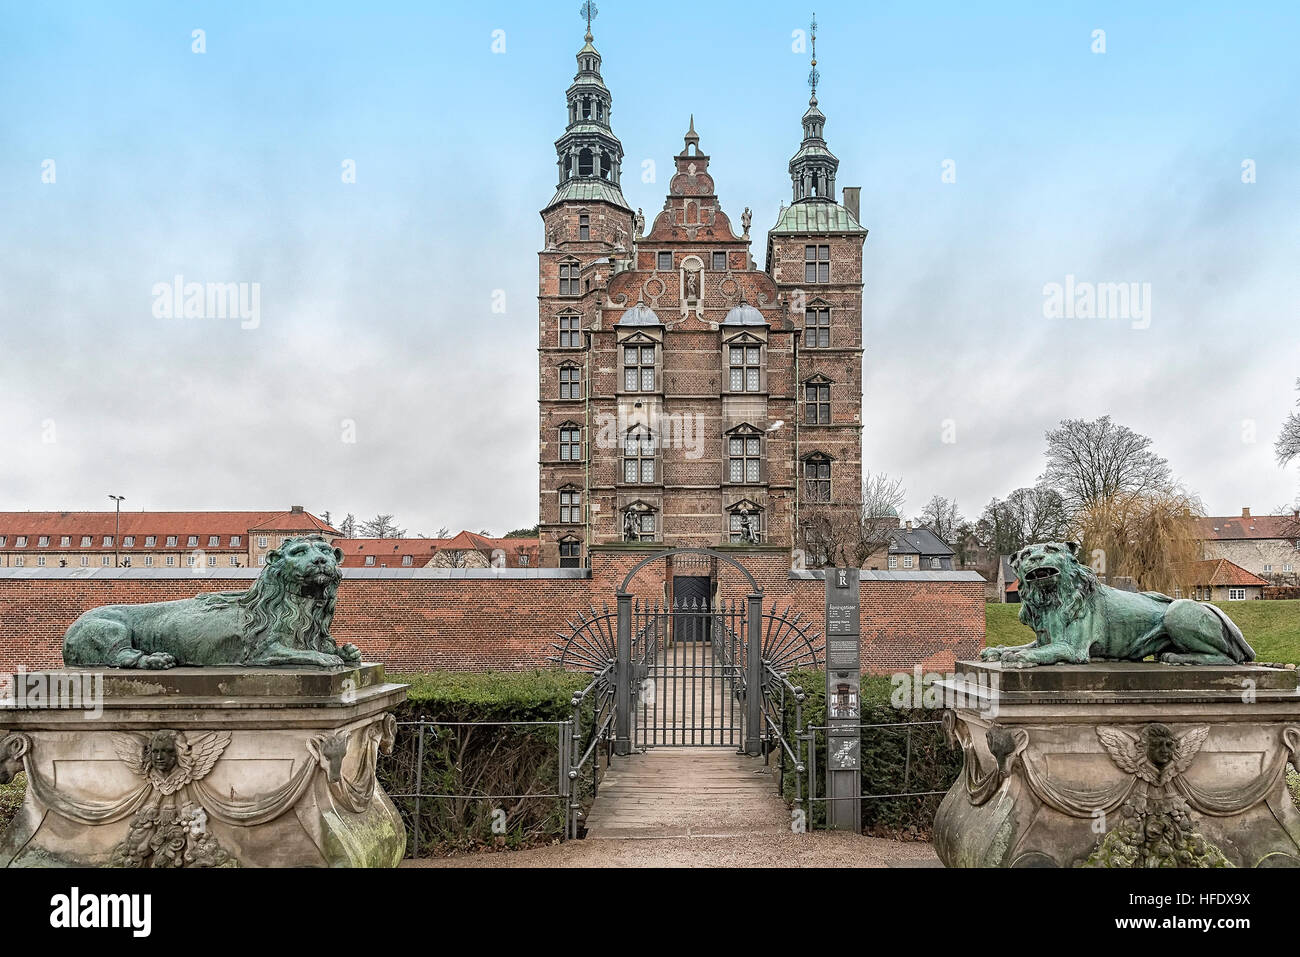 Rosenborg Castle is a renaissance castle located in Copenhagen, Denmark. The castle was originally built as a country summerhouse in 1606. Stock Photo